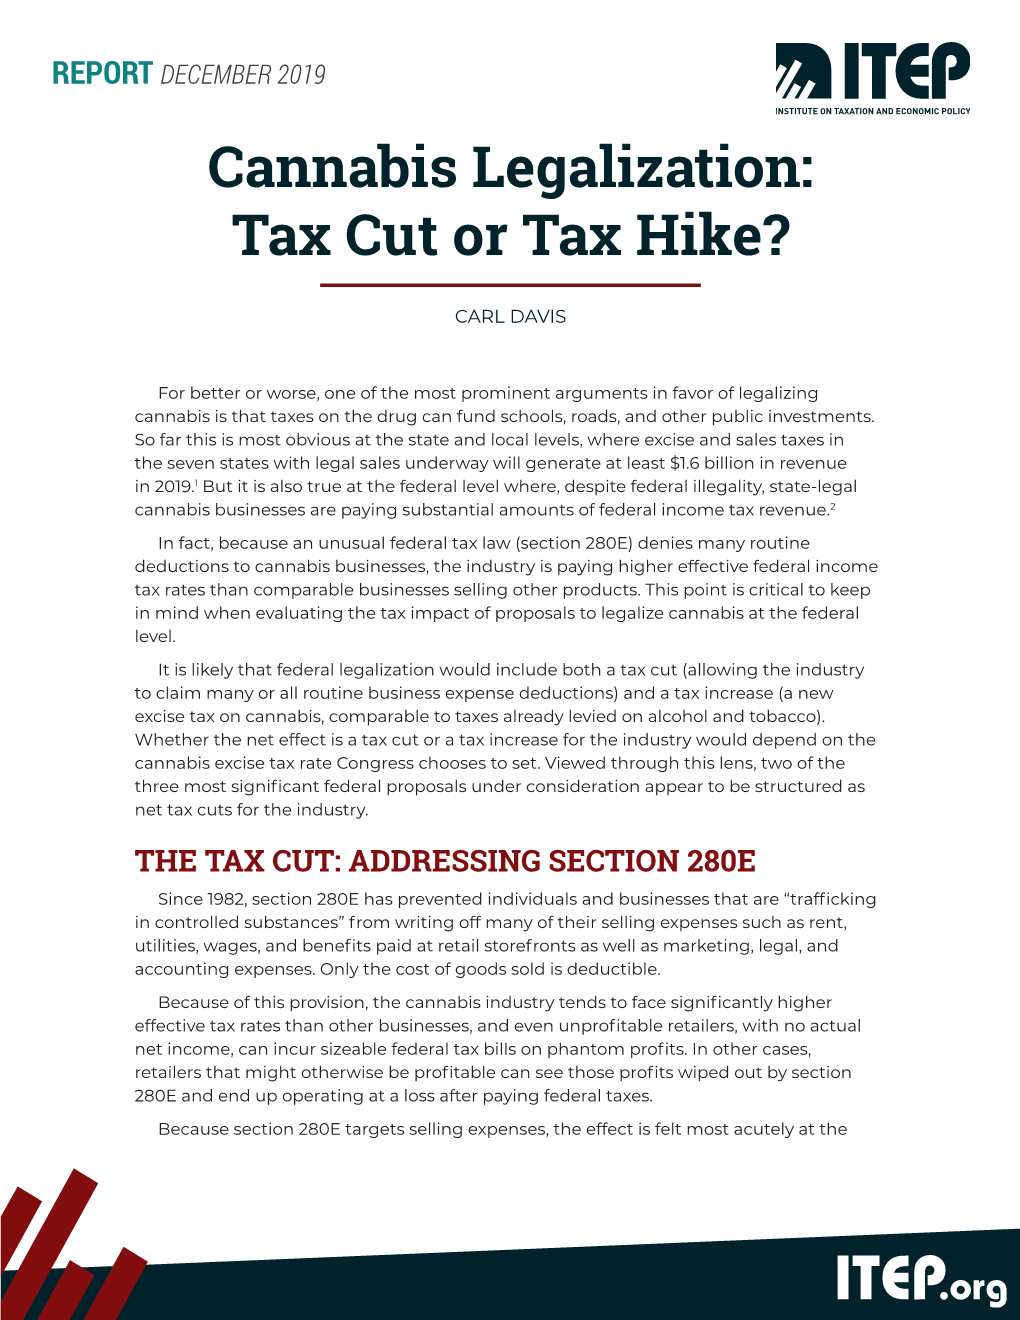 Cannabis Legalization: Tax Cut Or Tax Hike?